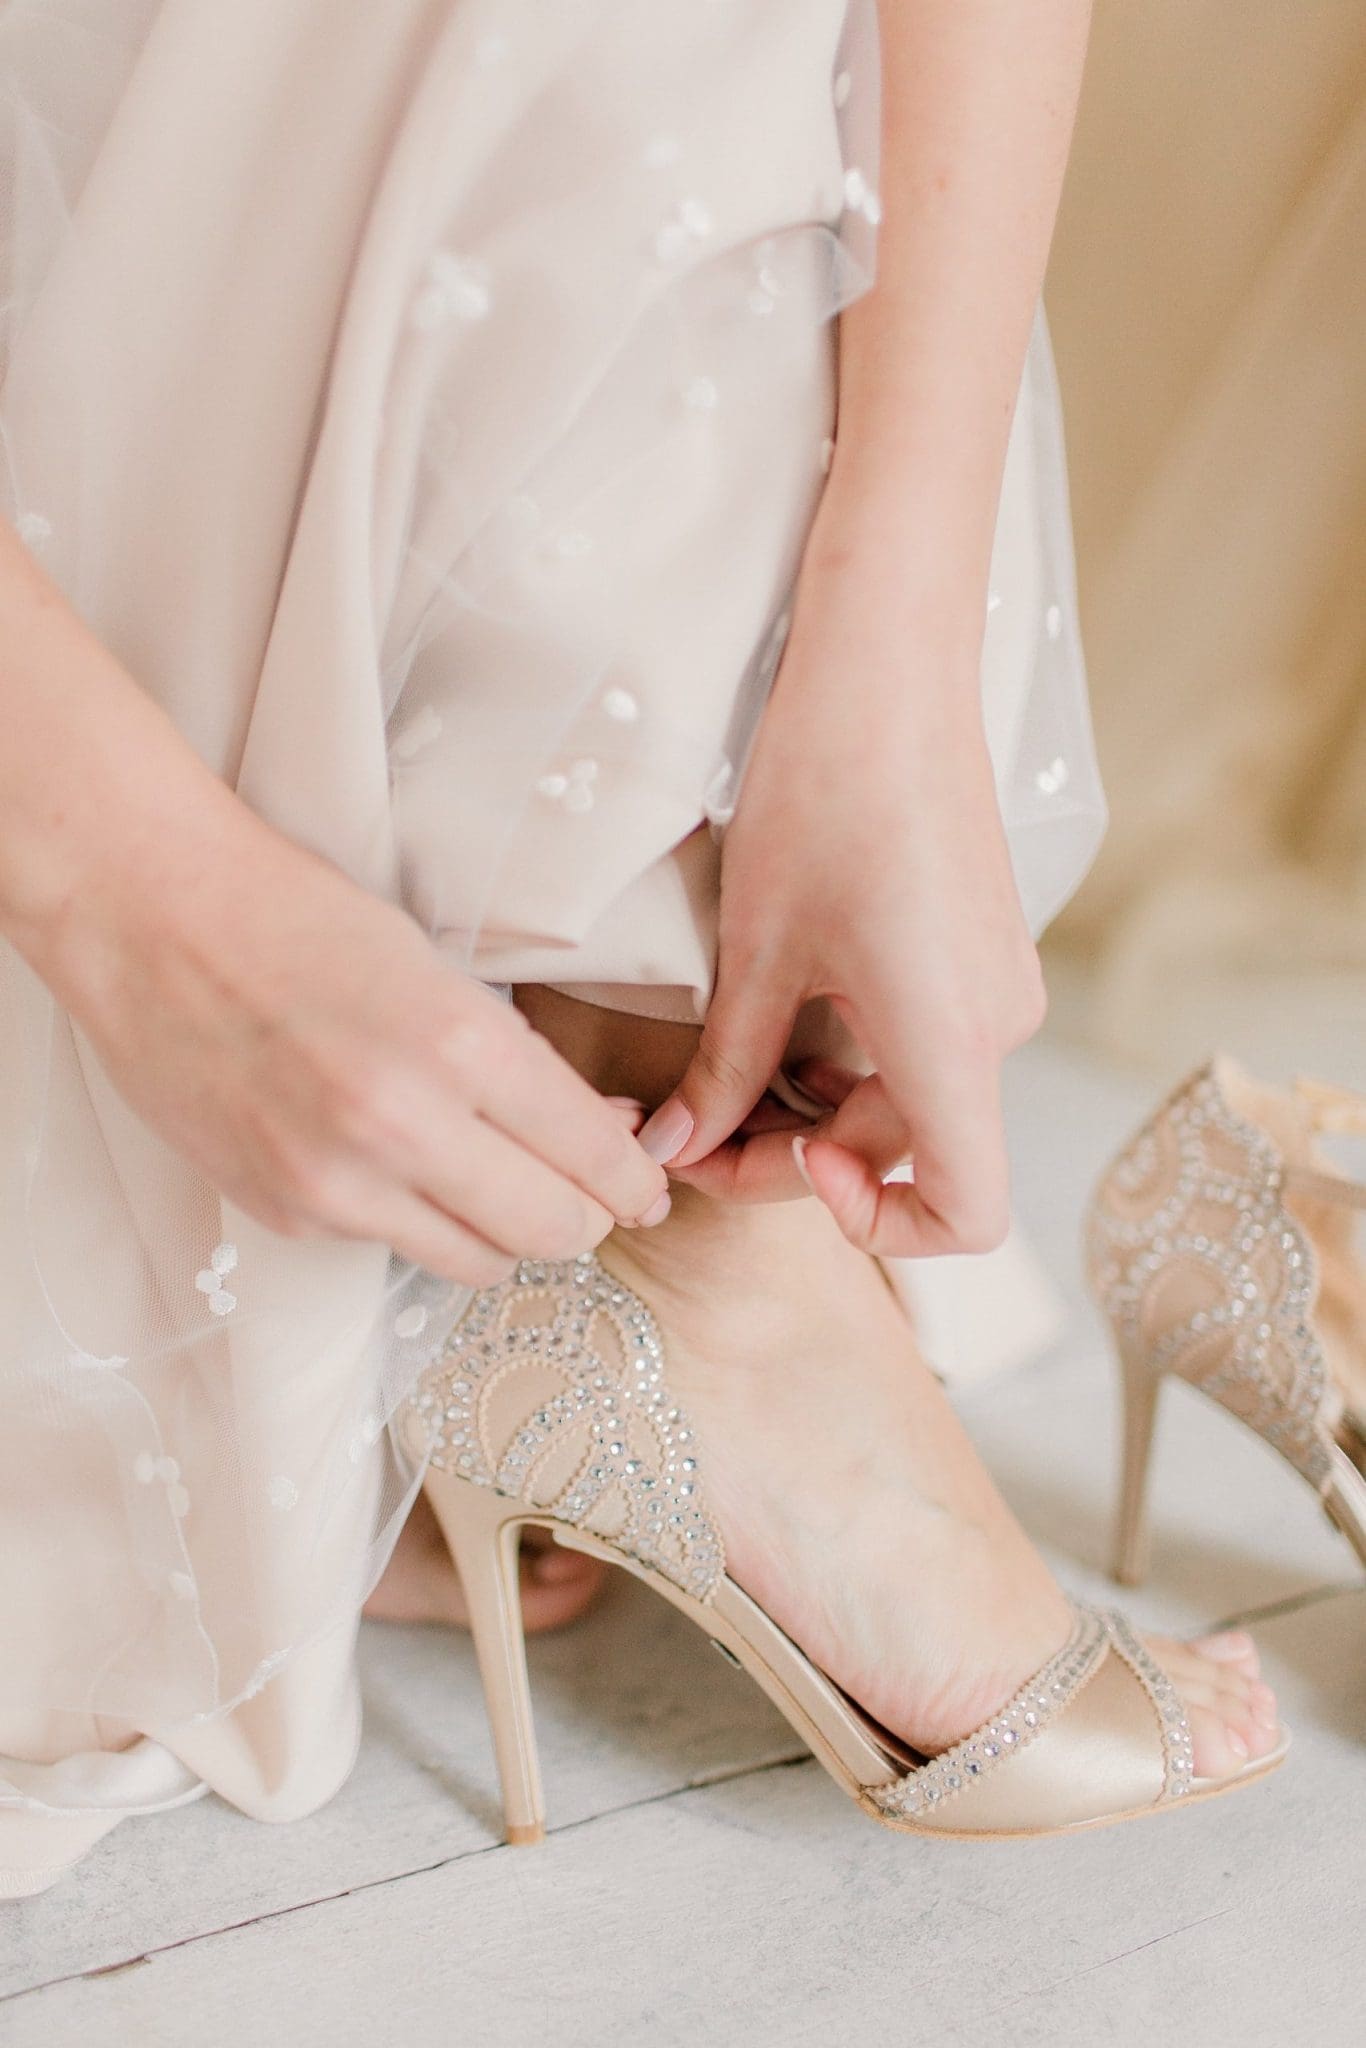 Image describes wedding shoes.